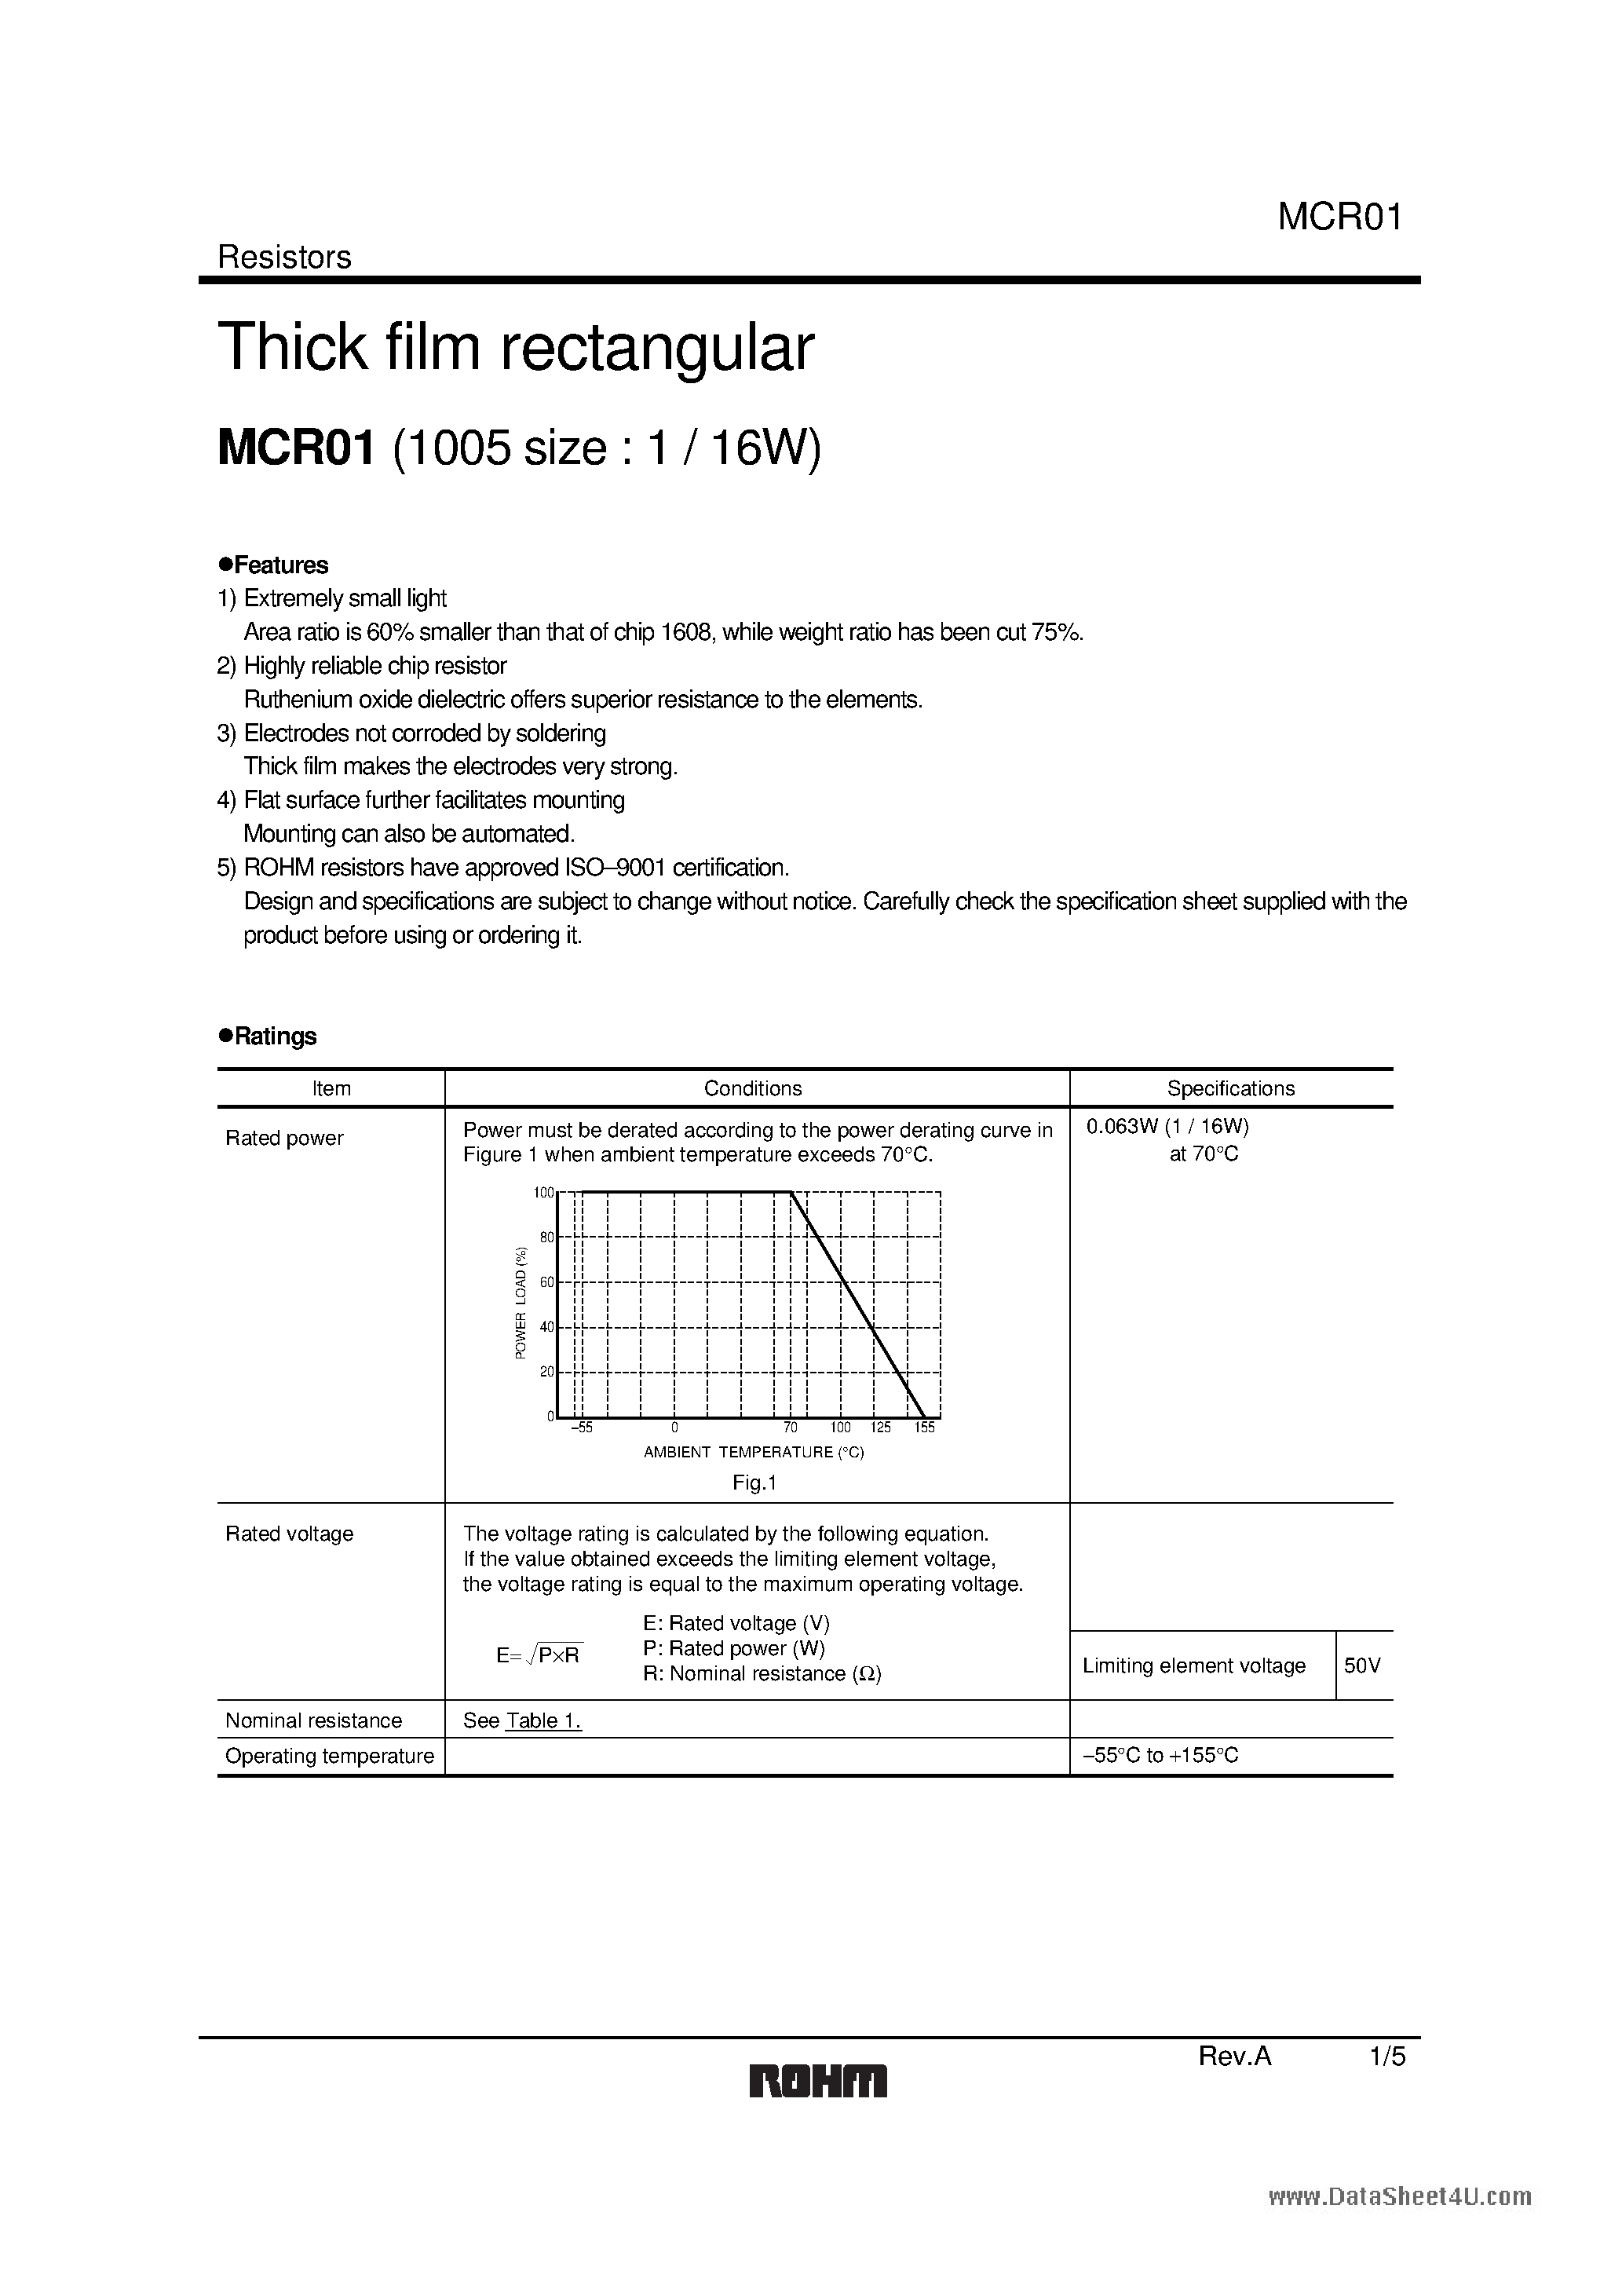 Datasheet MCR01 - Thick film rectangular page 1